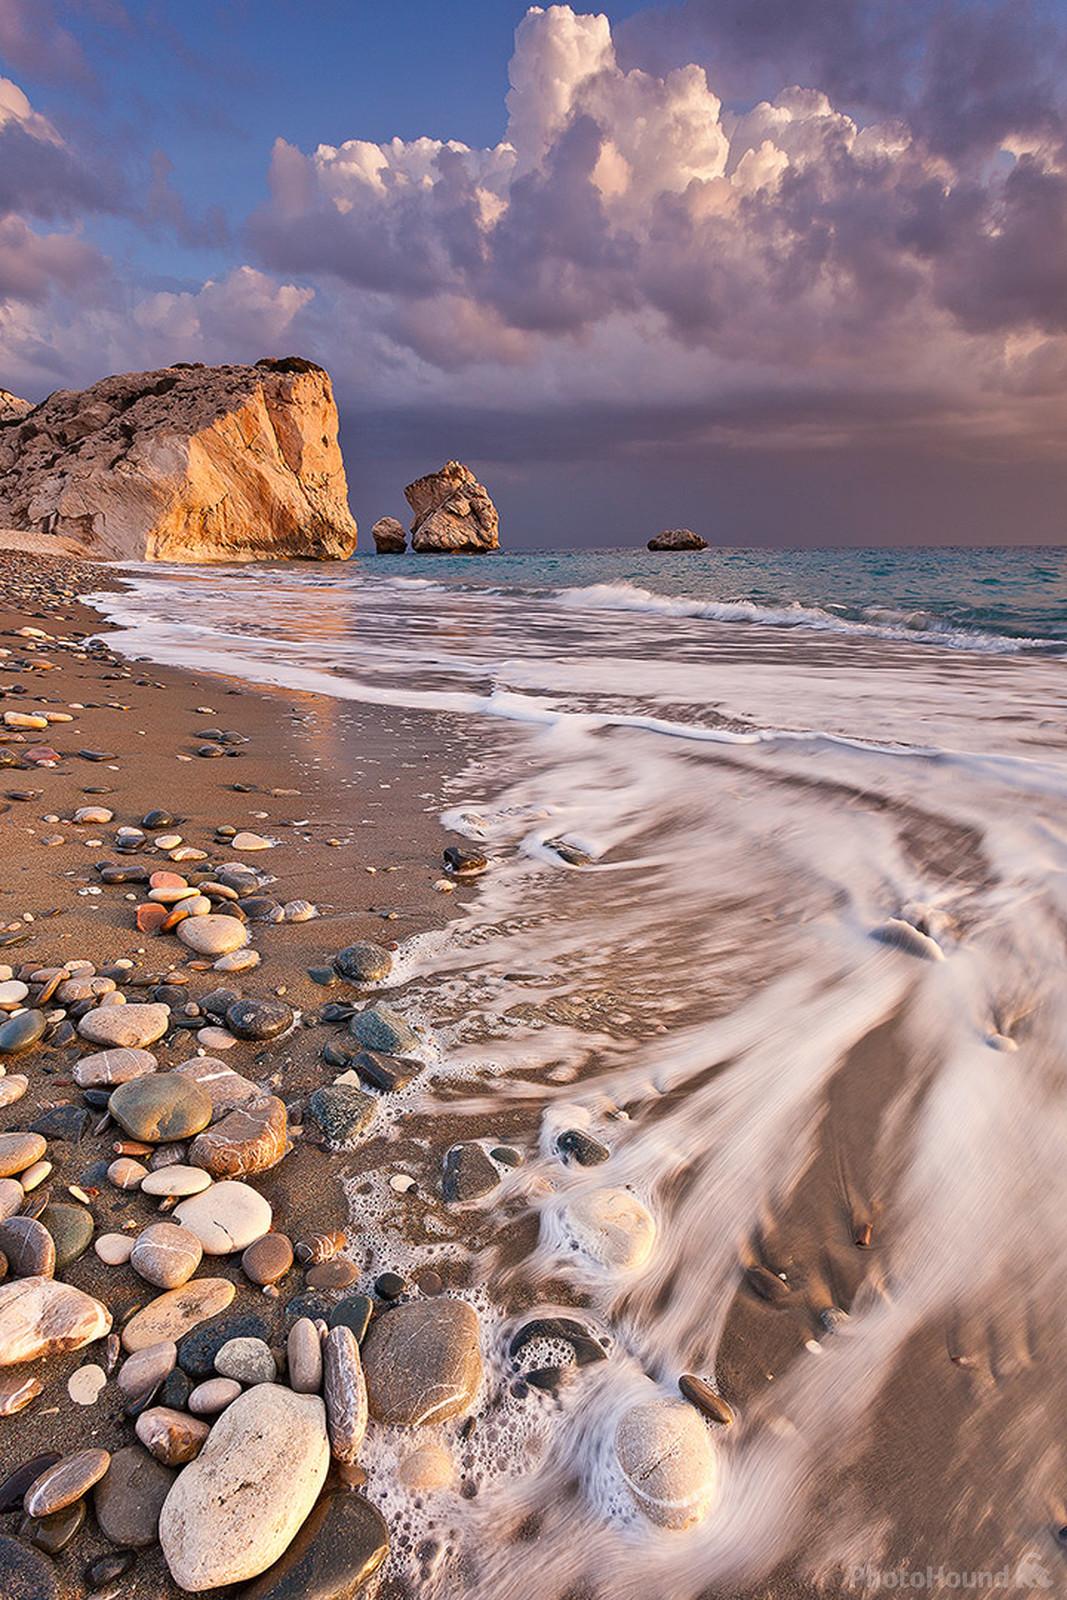 Cyprus photo locations